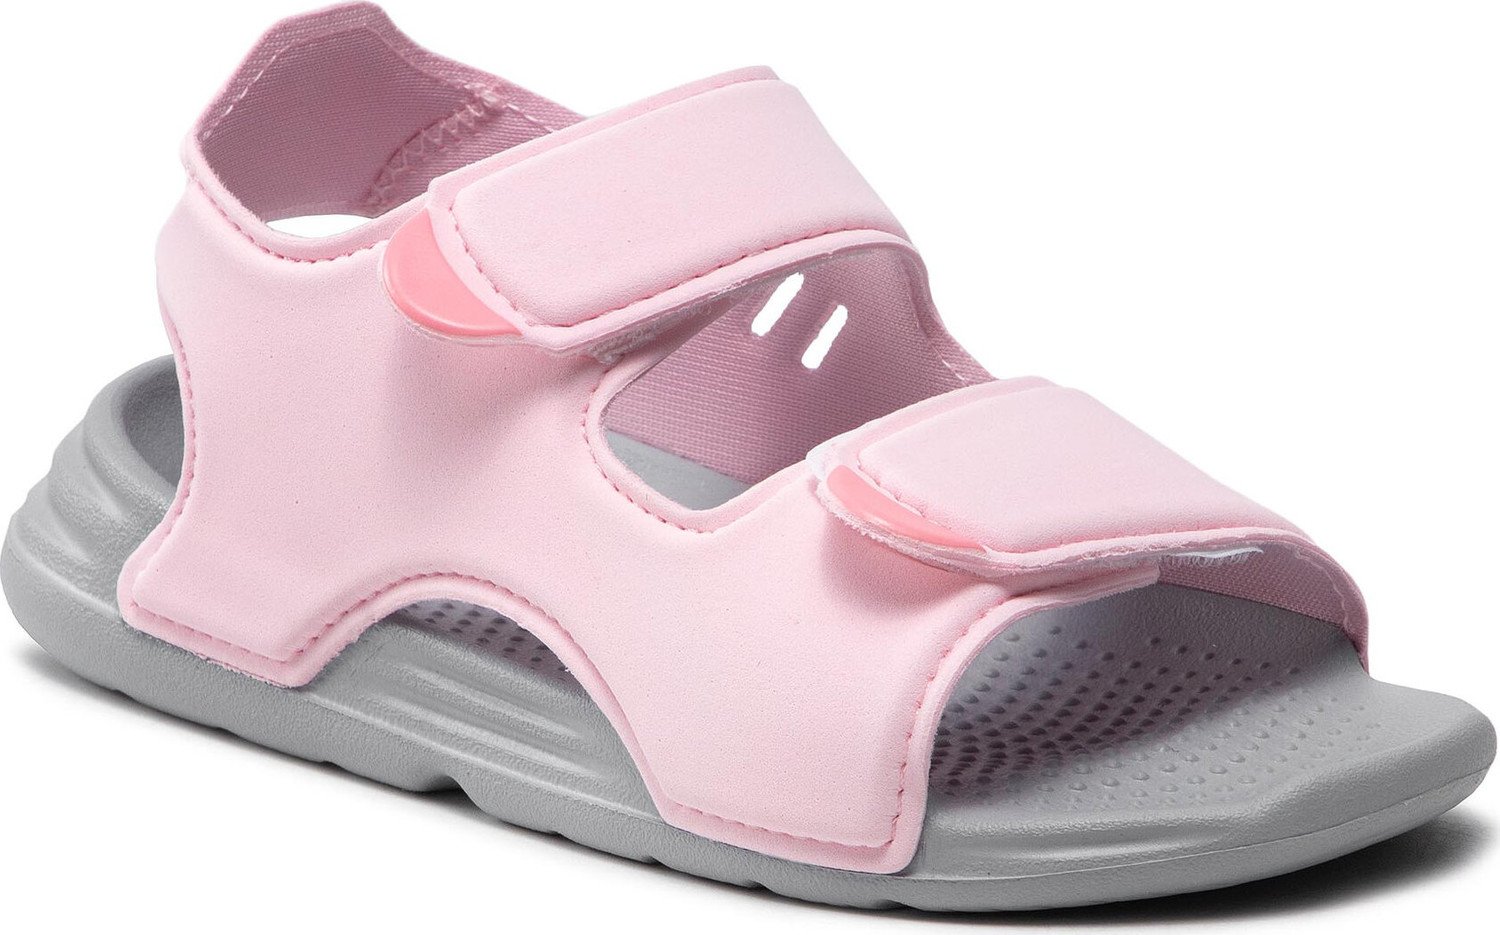 Sandály adidas Swim Sandal C FY8937 Clpink/Clpink/Clpink